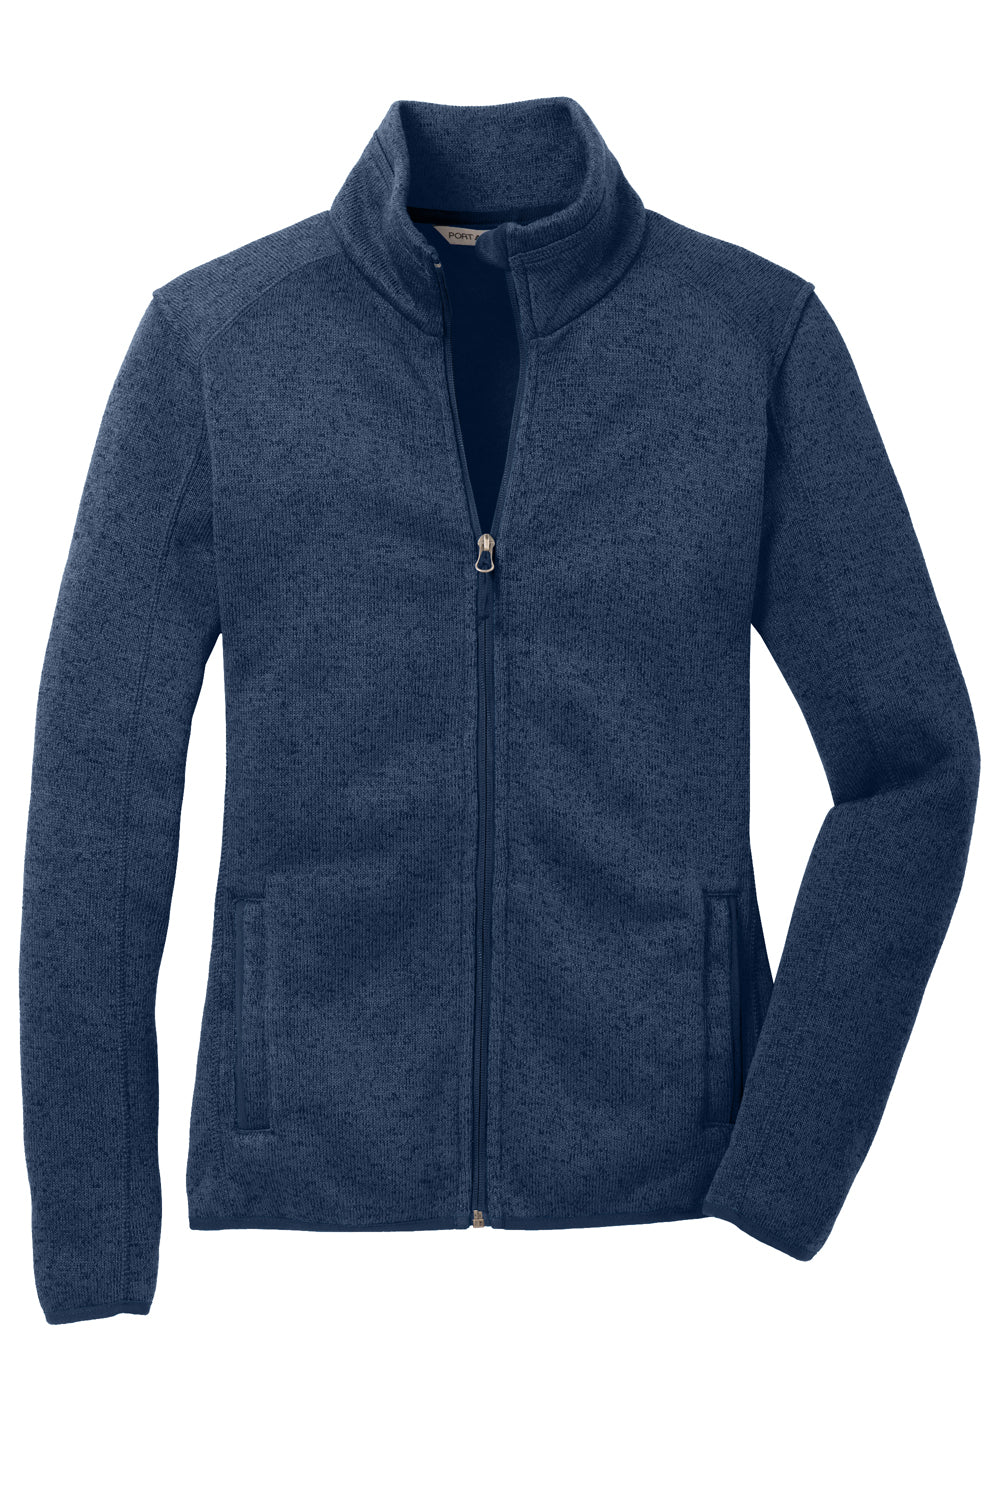 Port Authority Womens Full Zip Sweater Fleece Jacket Heather River Navy Blue Flat Front